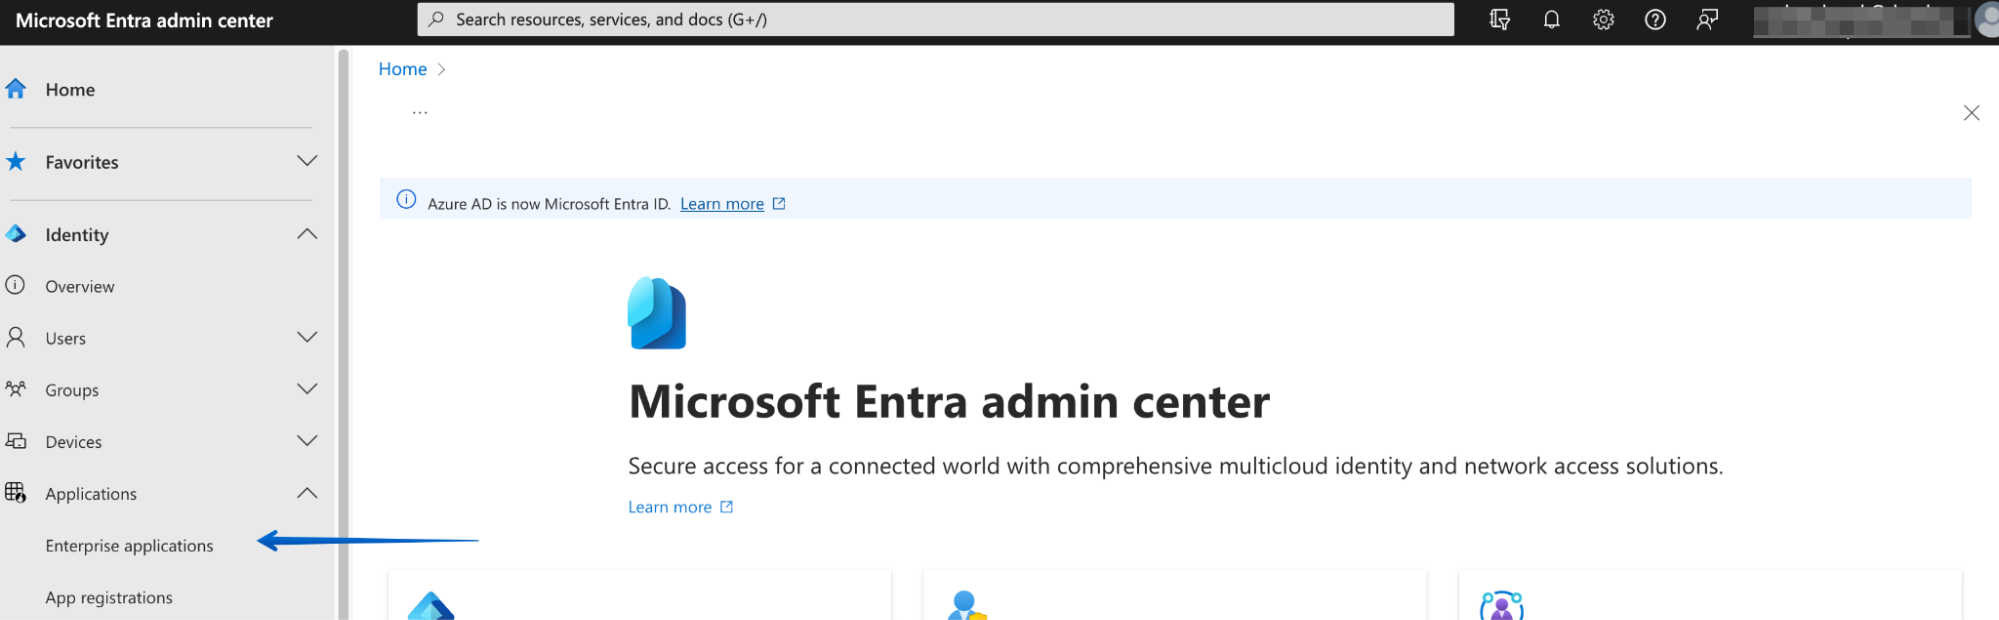 Pressing Enterprise applications in the Microsoft Entra admin center